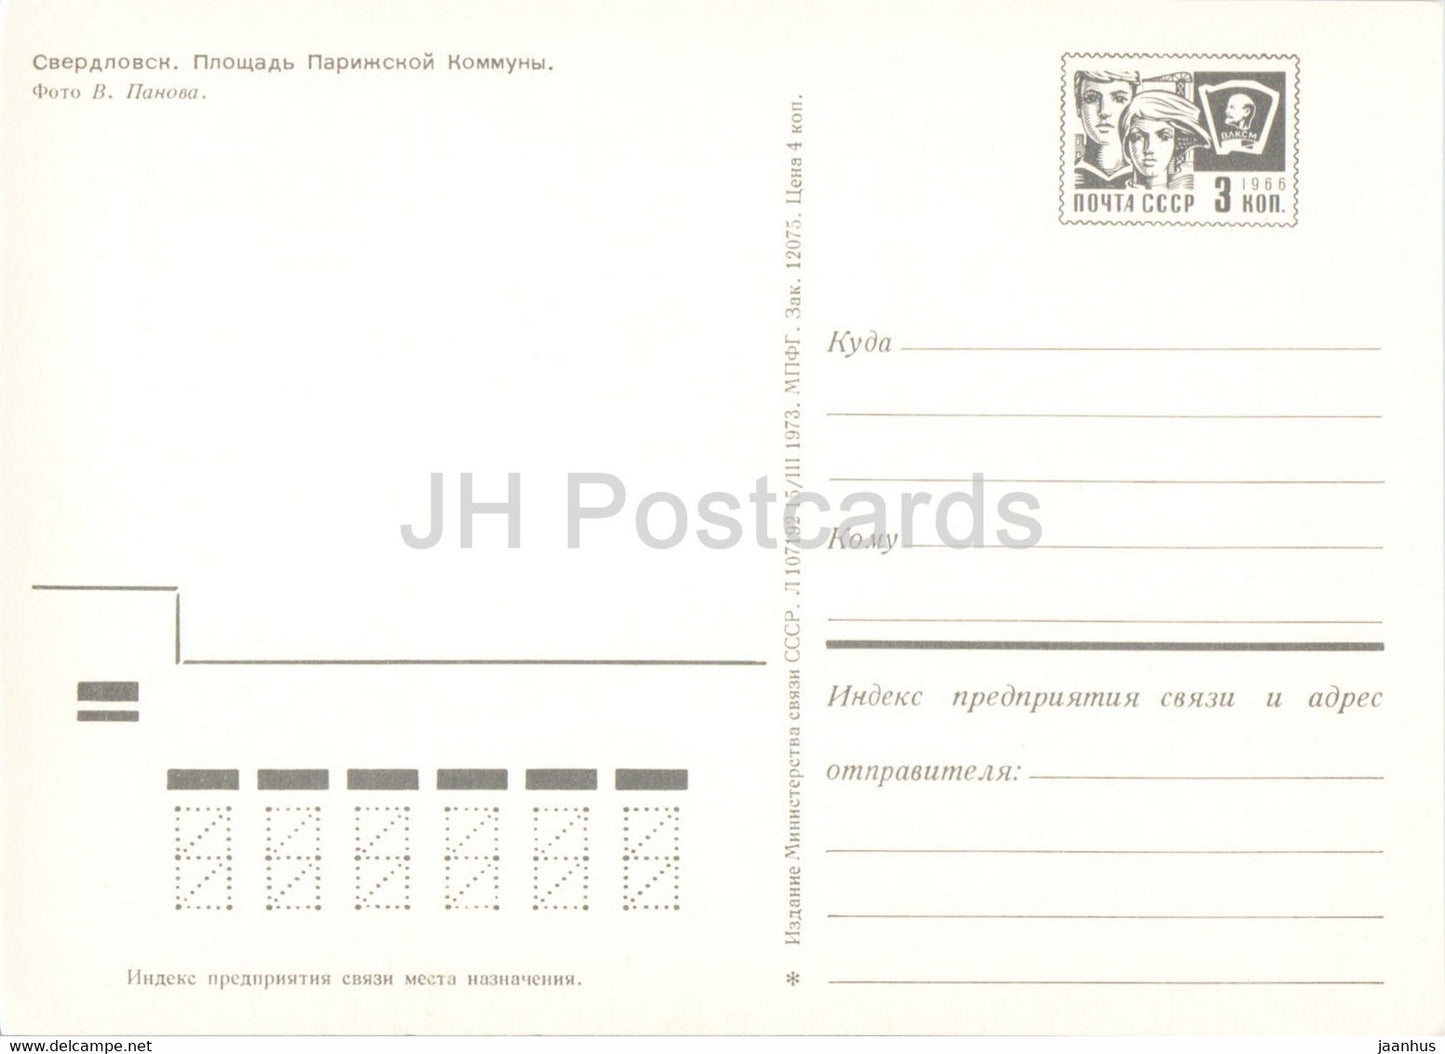 Sverdlovsk - Yekaterinburg - Paris Commune Square - trams - postal stationery - 1973 - Russia USSR - unused